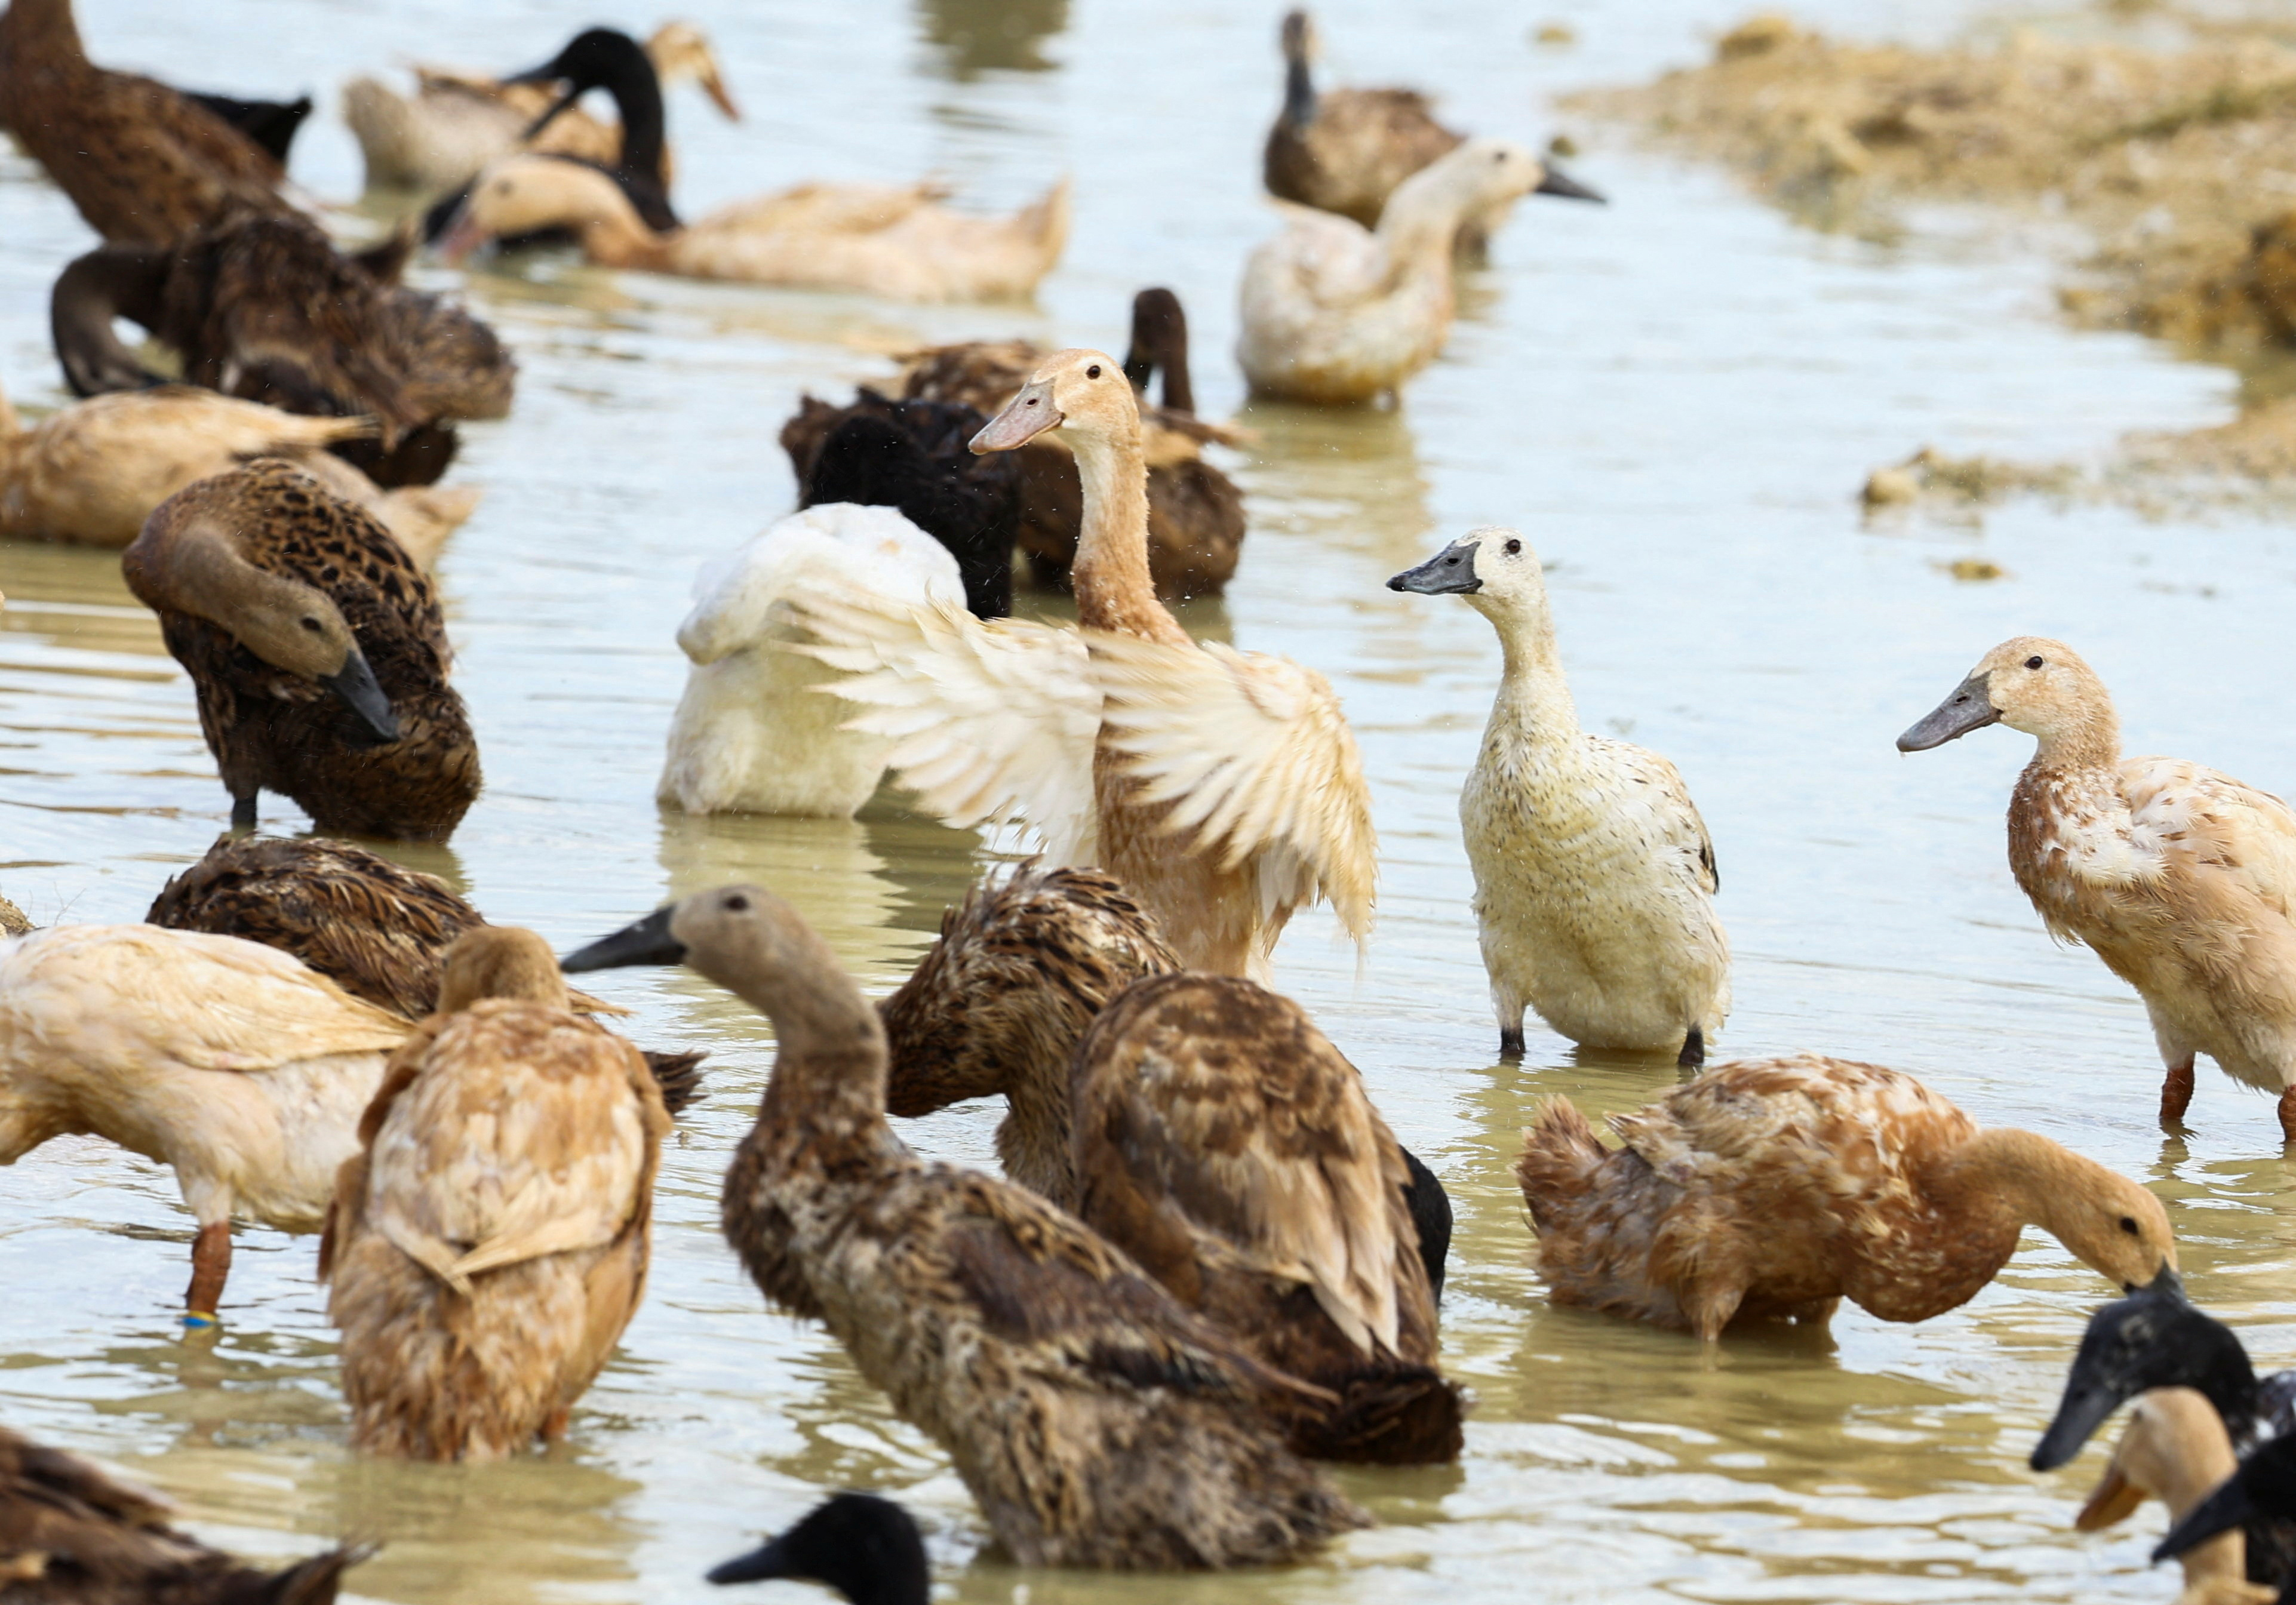 Pest-busting ducks keep Cape Winelands' vineyards healthy